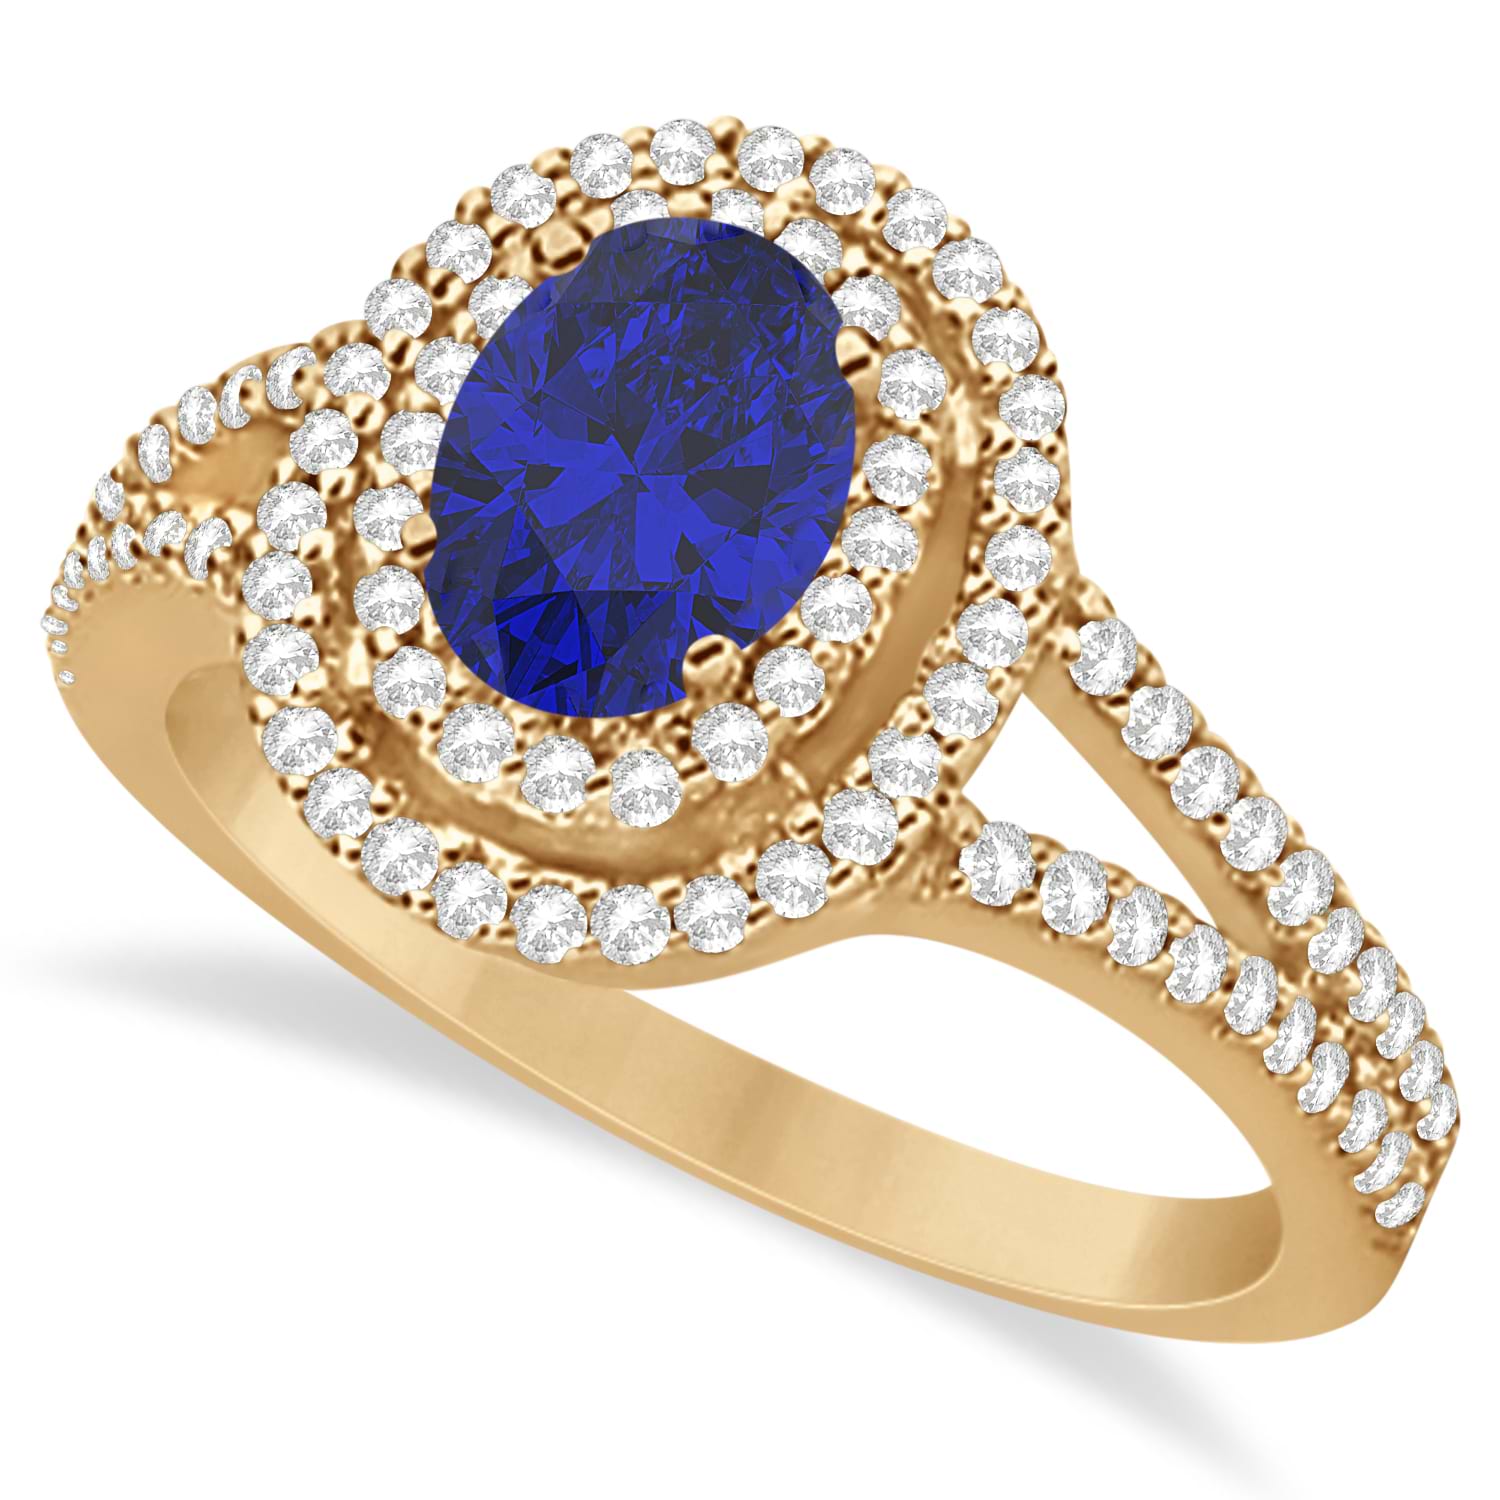 Double Halo Diamond & Blue Sapphire Engagement Ring 14K Rose Gold 1.34ctw